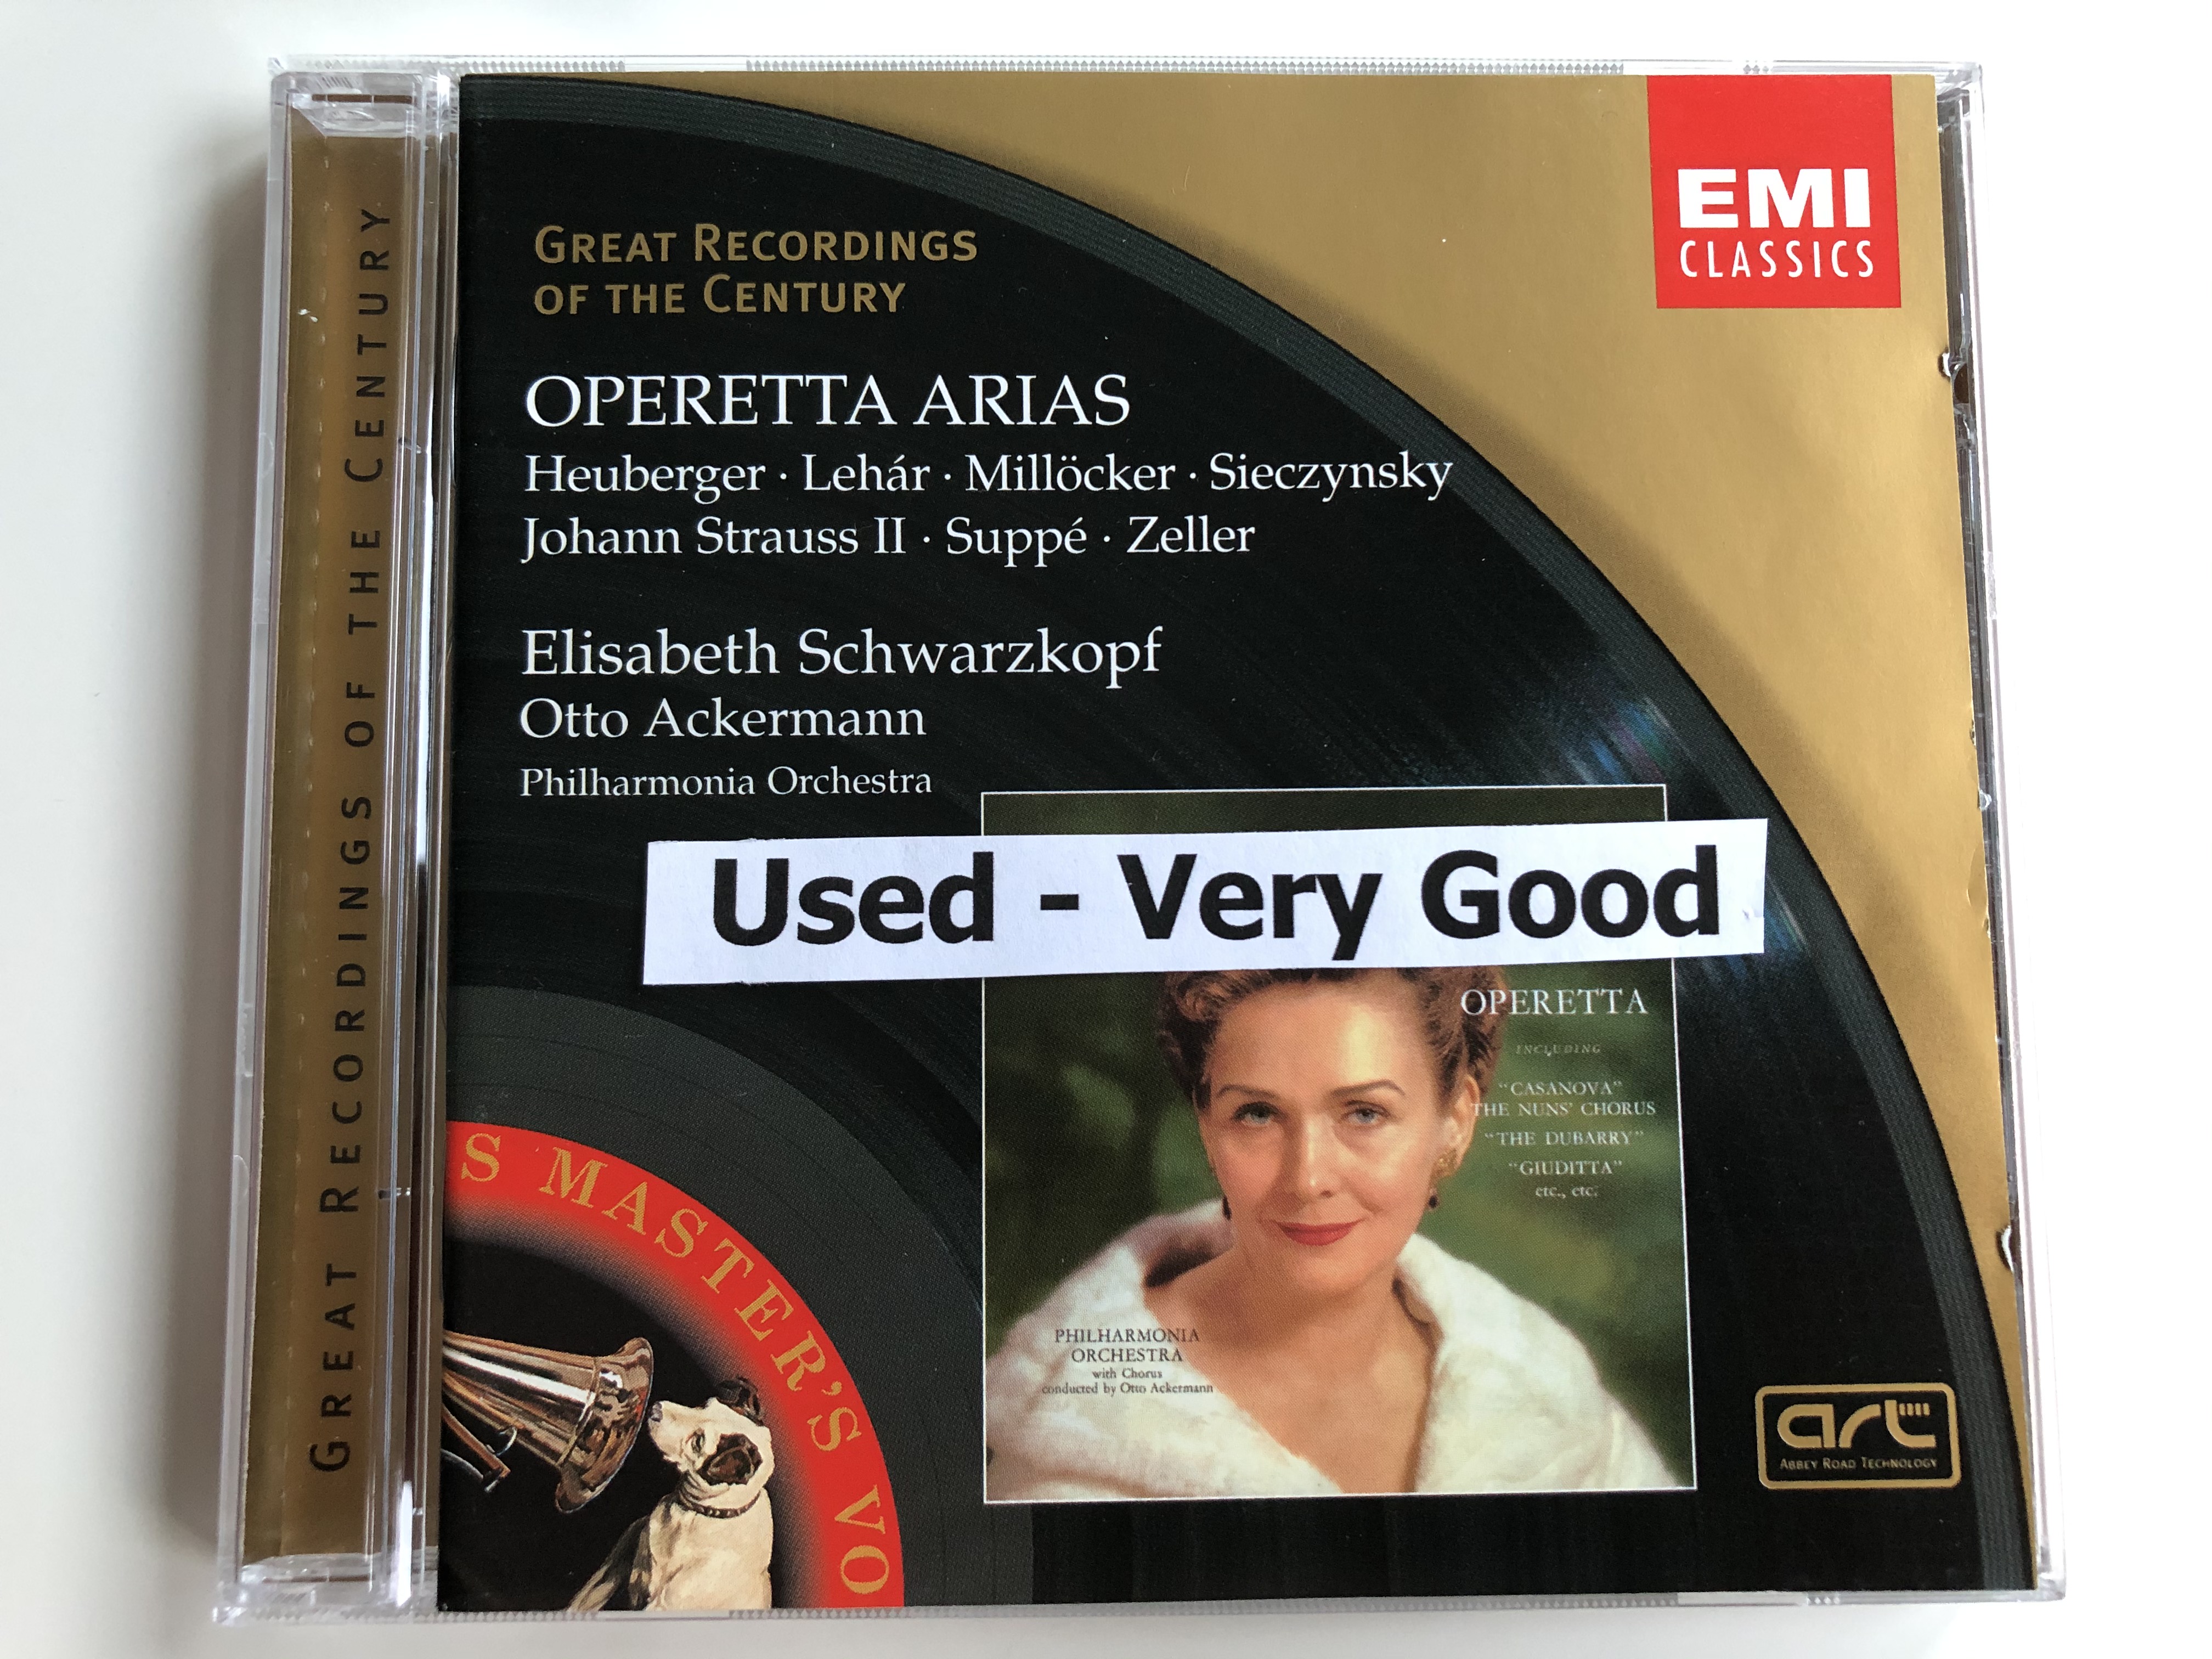 operetta-arias-heuberger-leh-r-mill-cker-sieczynsky-johann-strauss-ii-supp-zeller-elisabeth-schwarzkopf-otto-ackermann-philharmonia-orchestra-emi-classics-audio-cd-1999-stereo-724356-1-.jpg